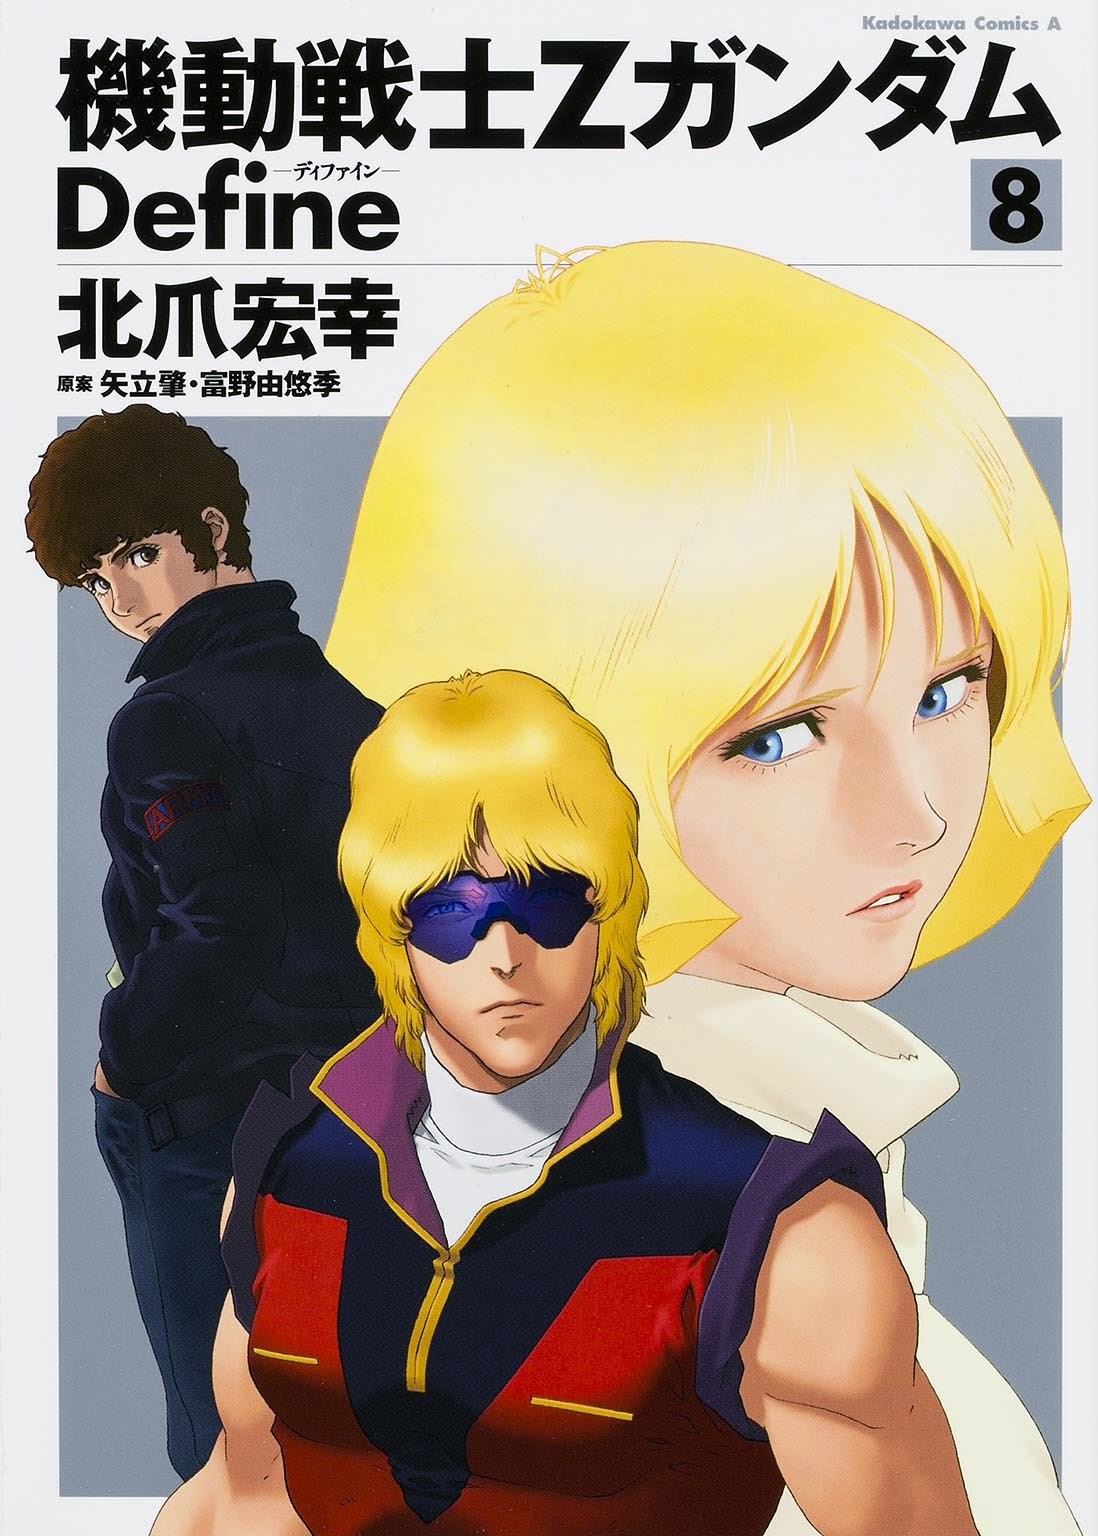 Mobile Suit Z Gundam Define Vol 8 Kadokawa Comics Ace Release Info Gundam Kits Collection News And Reviews